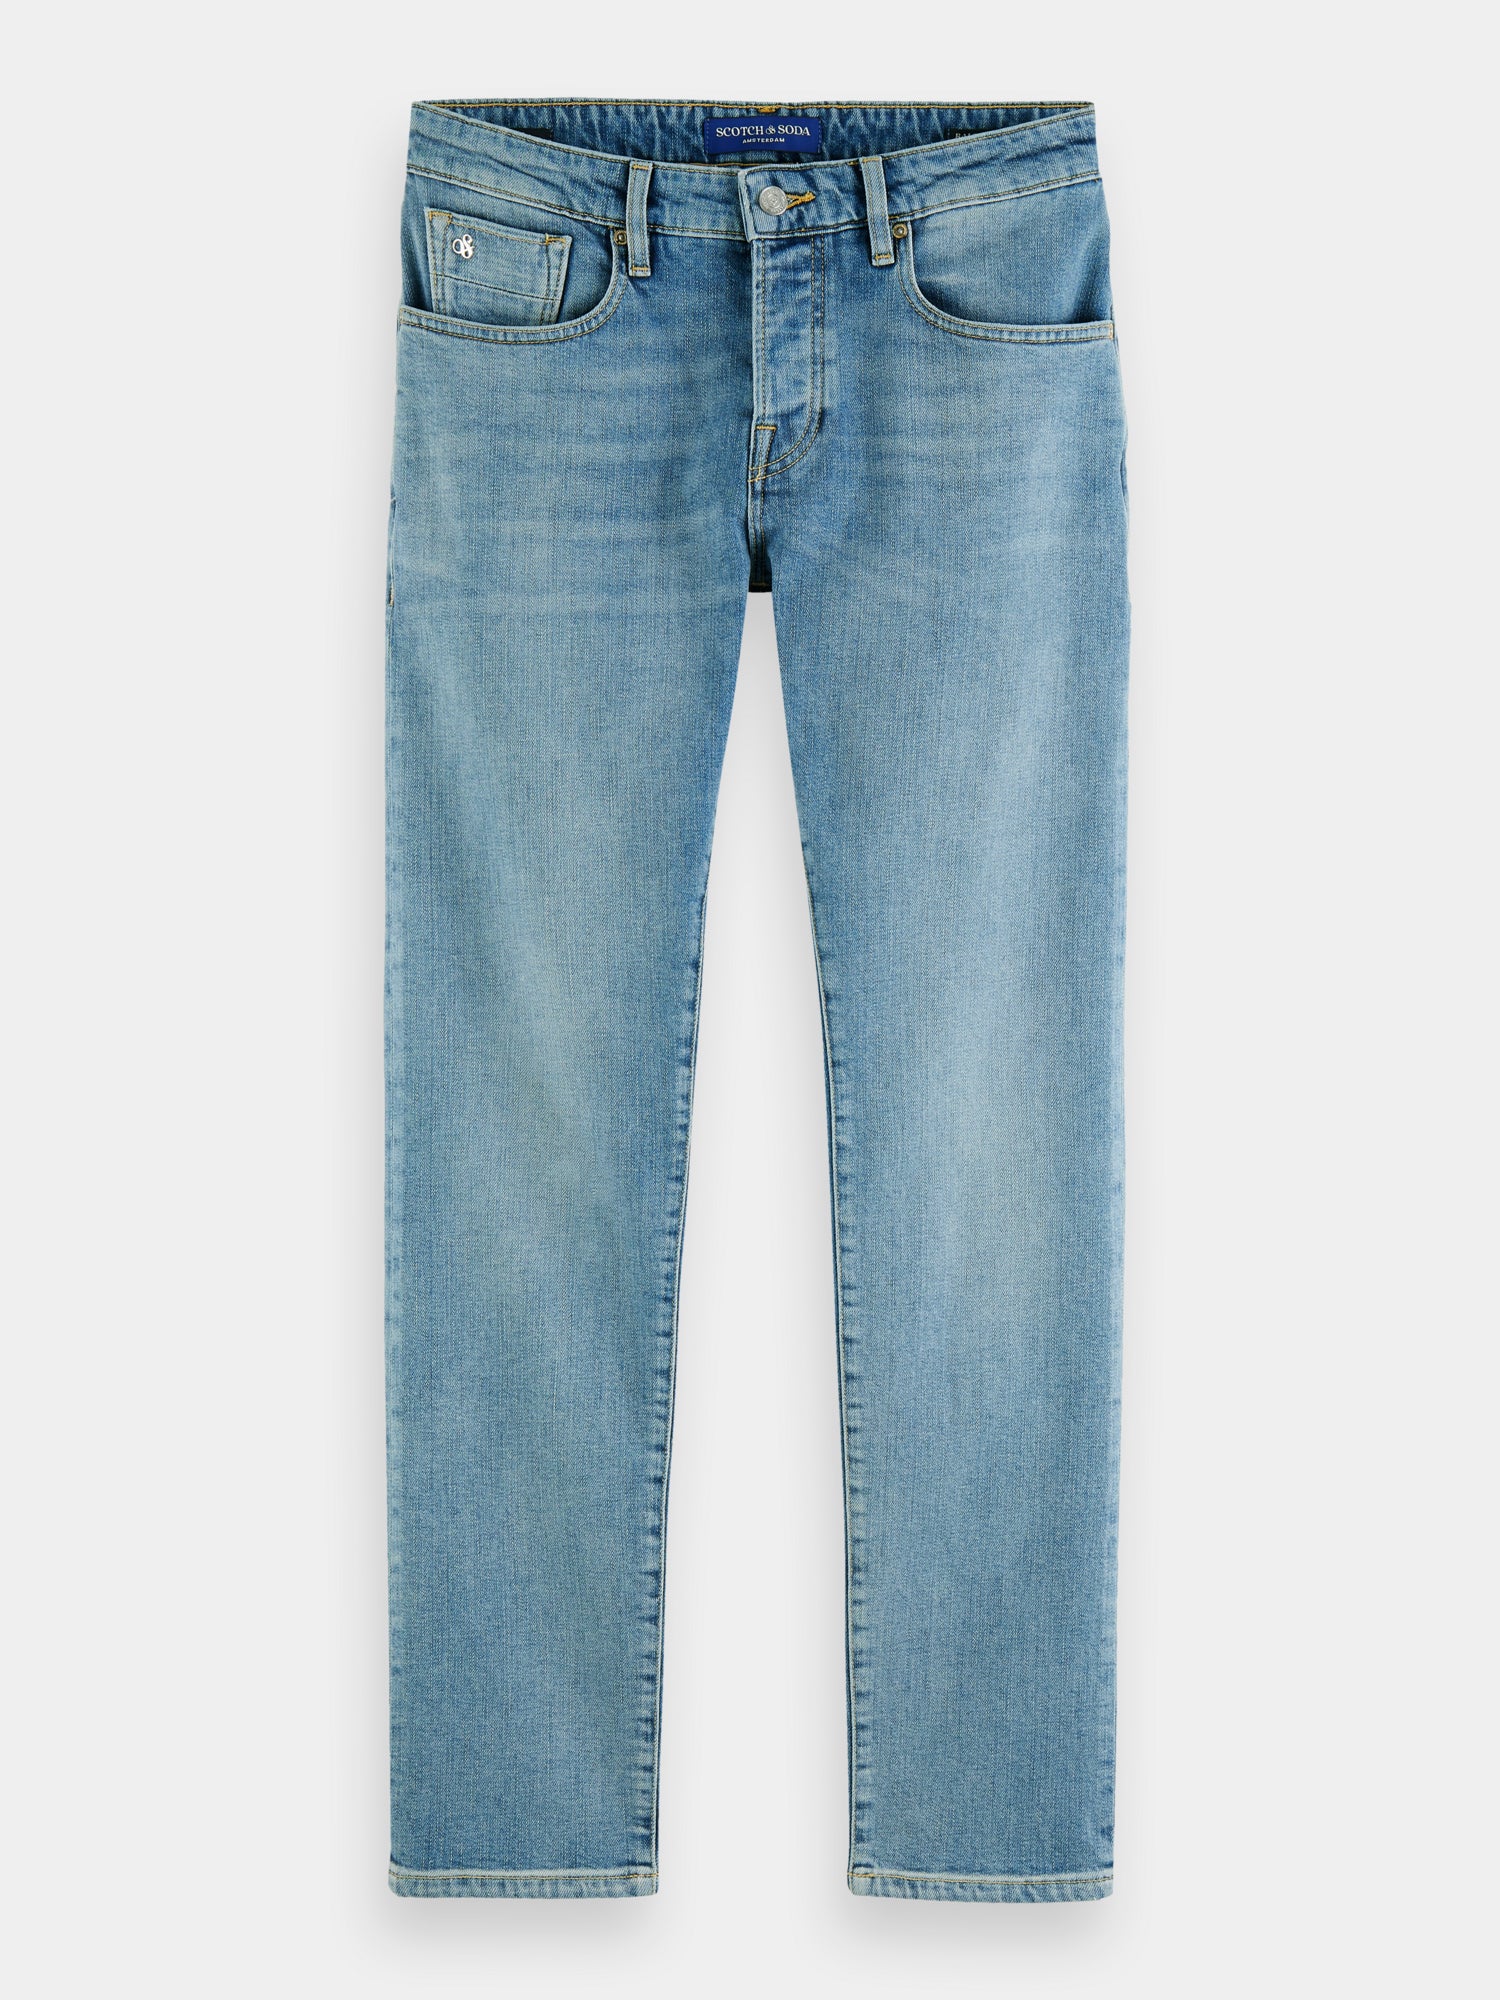 Ralston regular slim fit jeans - Aqua Blue